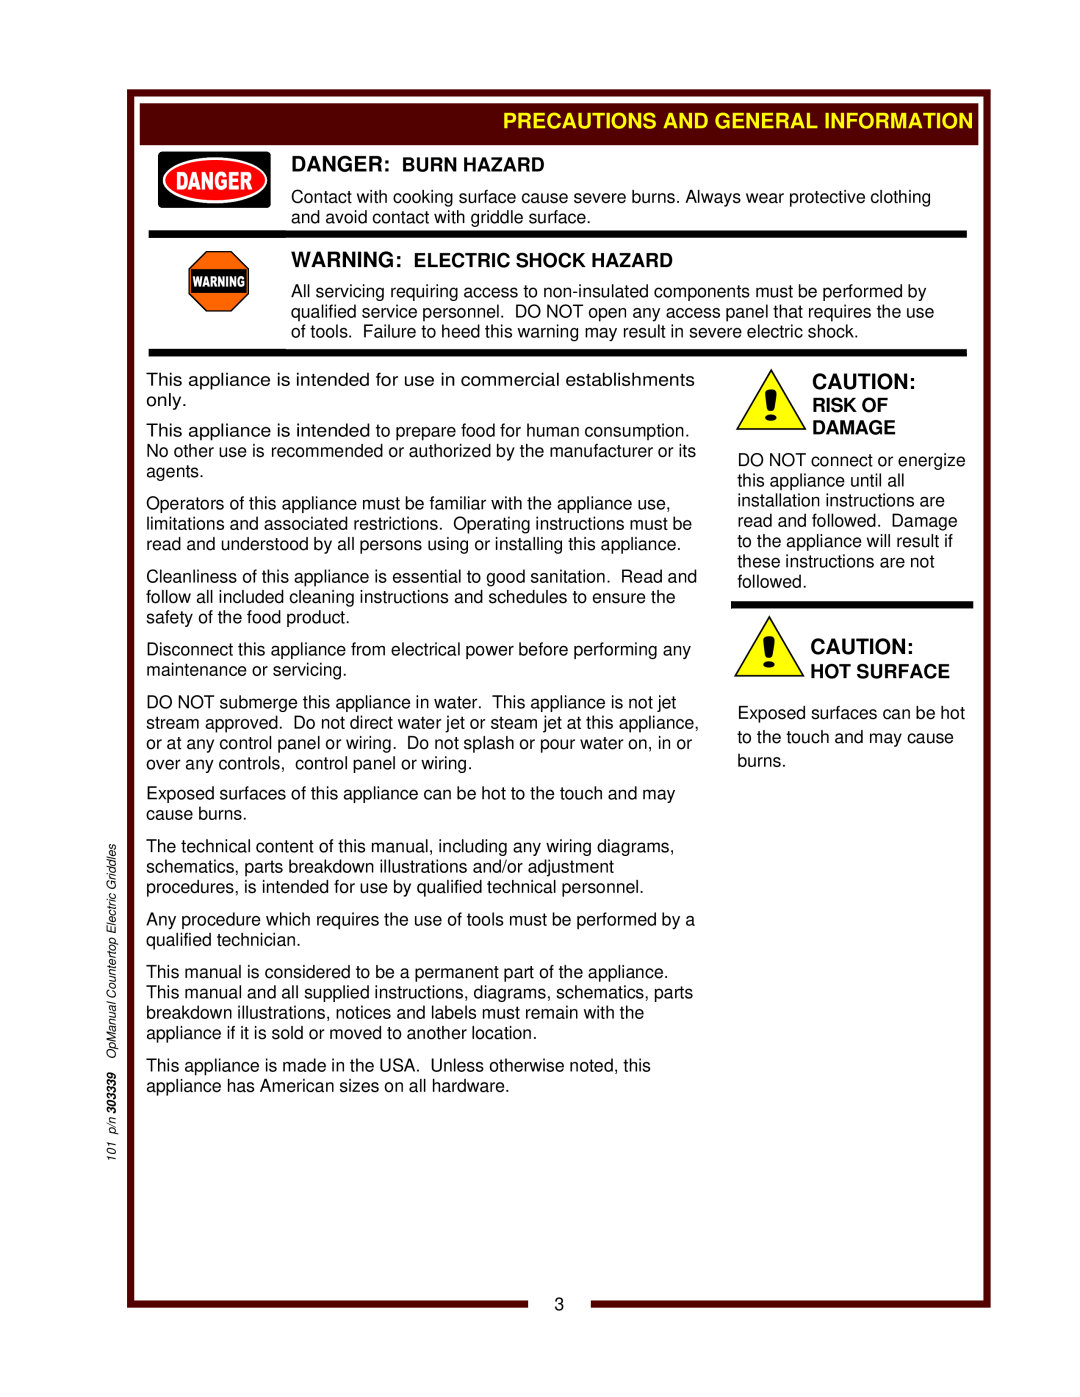 Bloomfield G60 Precautions And General Information, Danger Burn Hazard, Warning Electric Shock Hazard, Risk Of Damage 